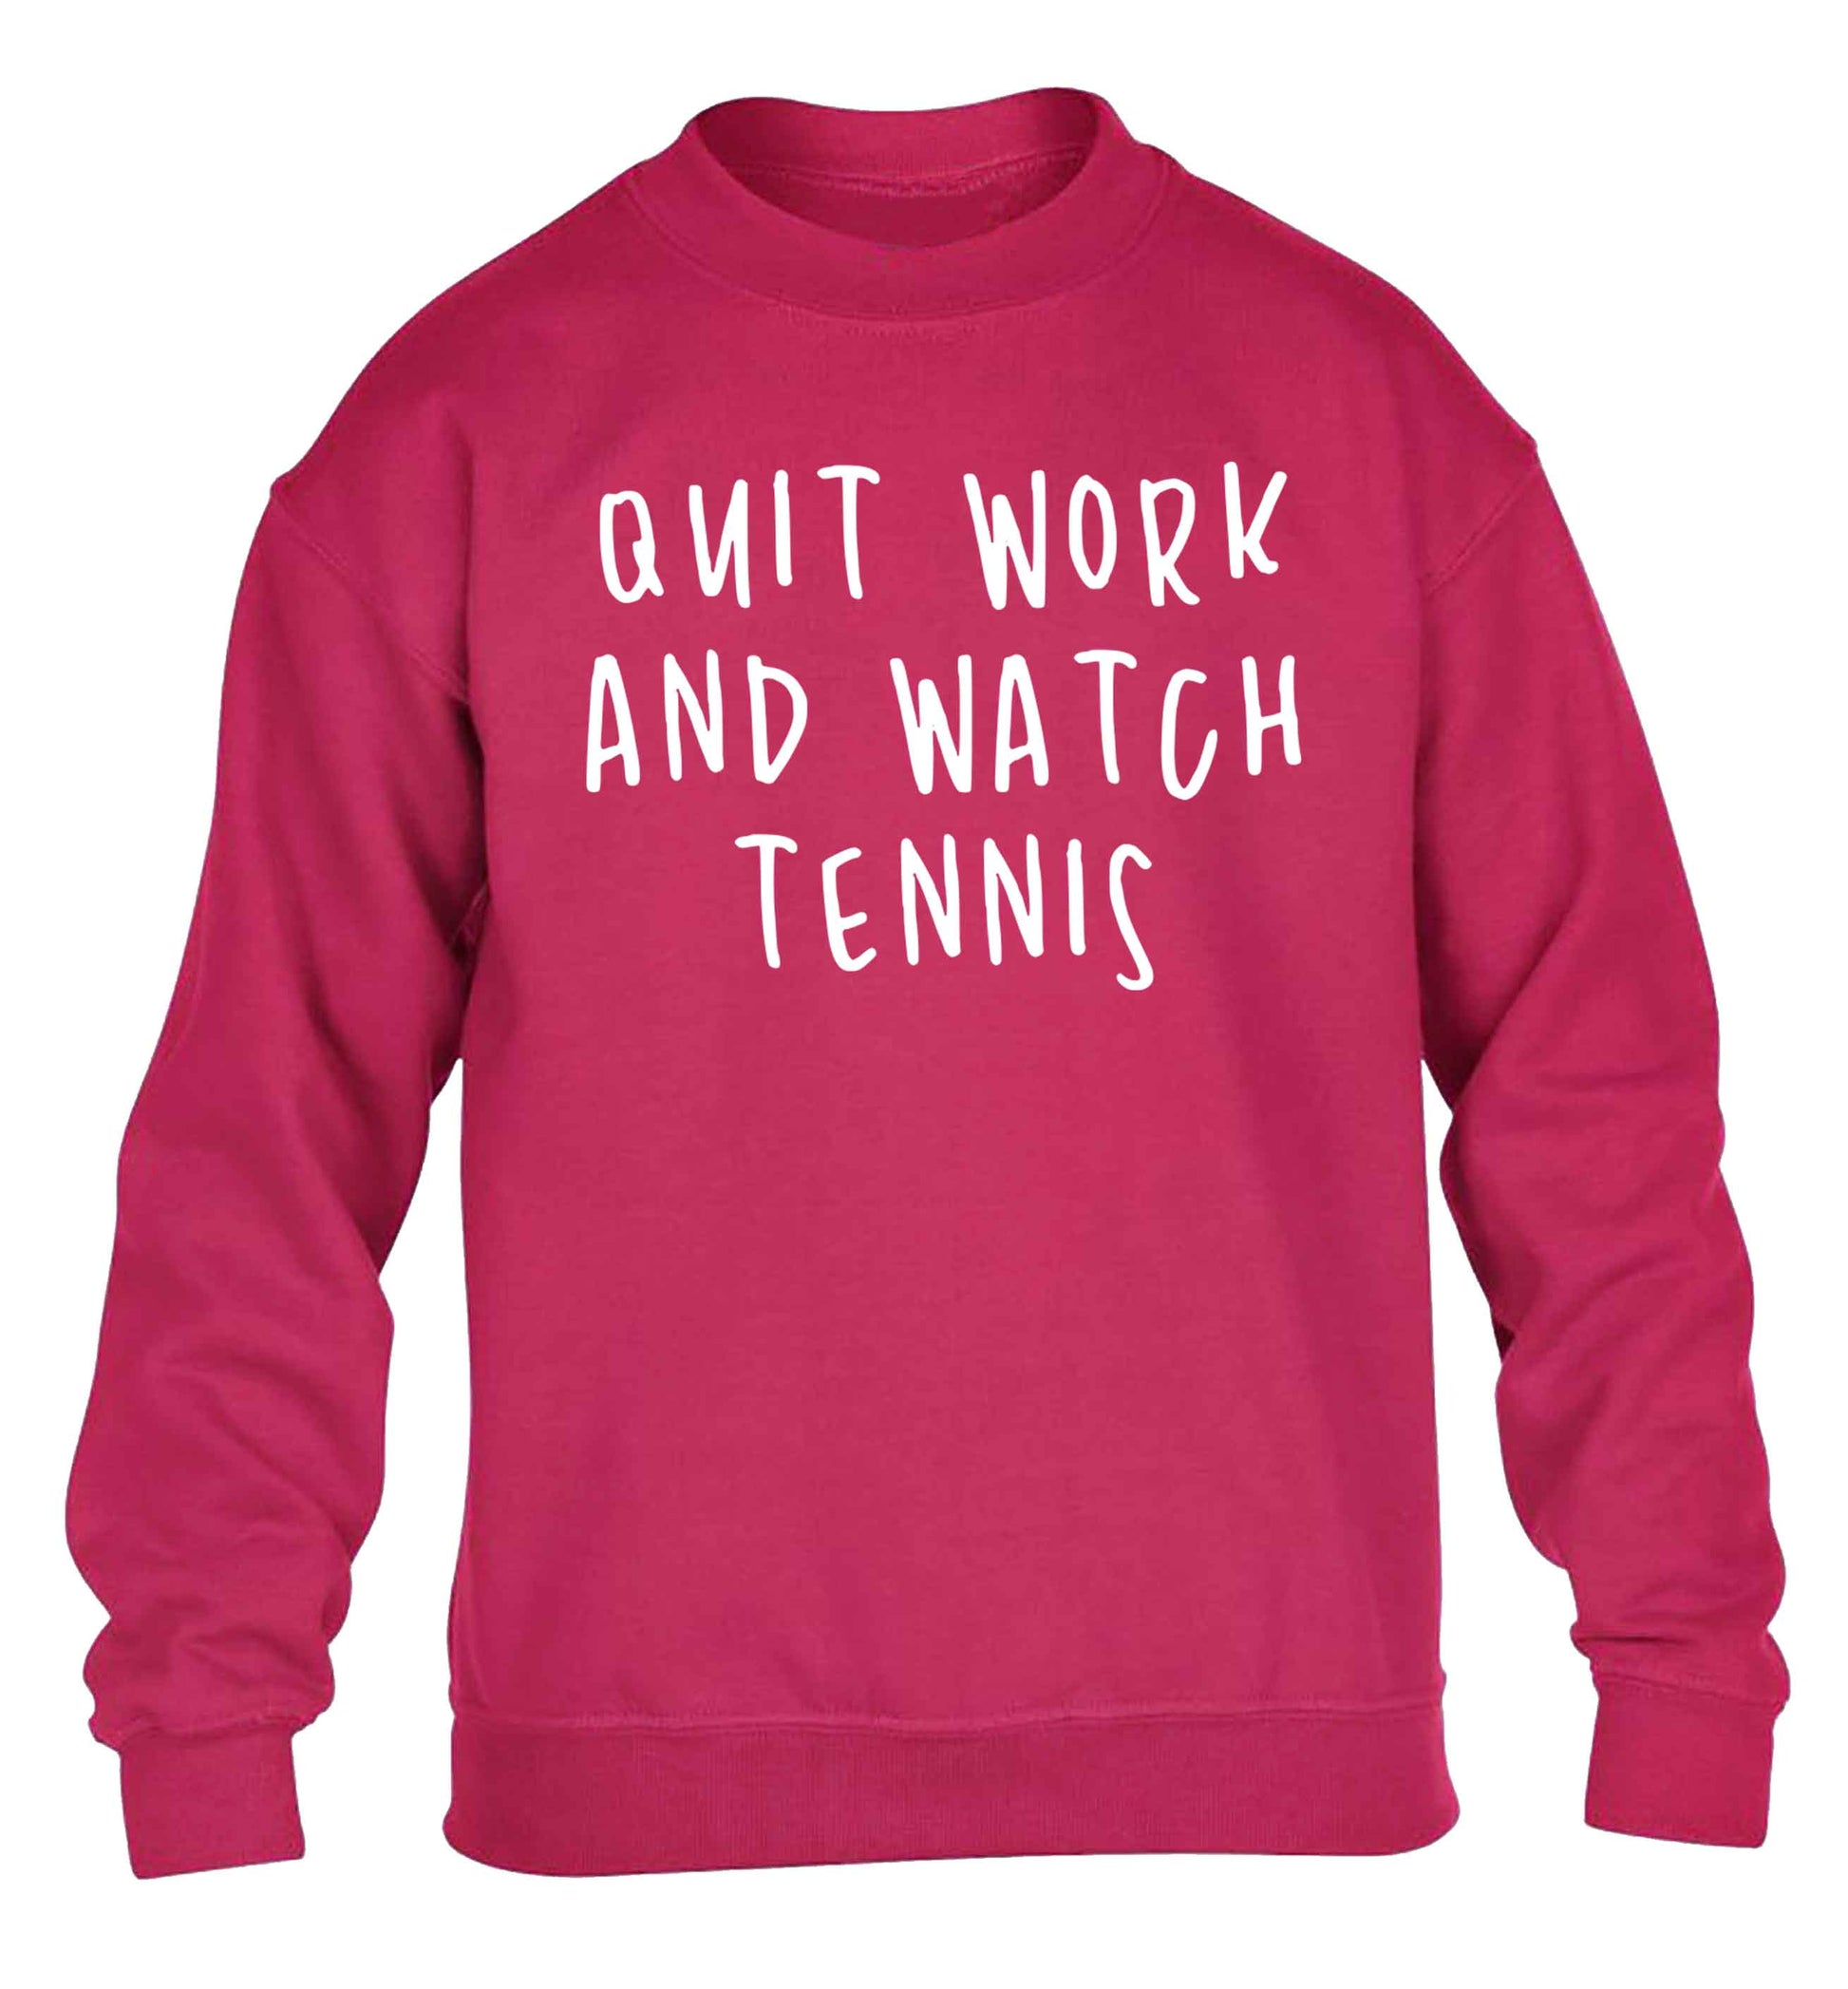 Quit work and watch tennis children's pink sweater 12-13 Years